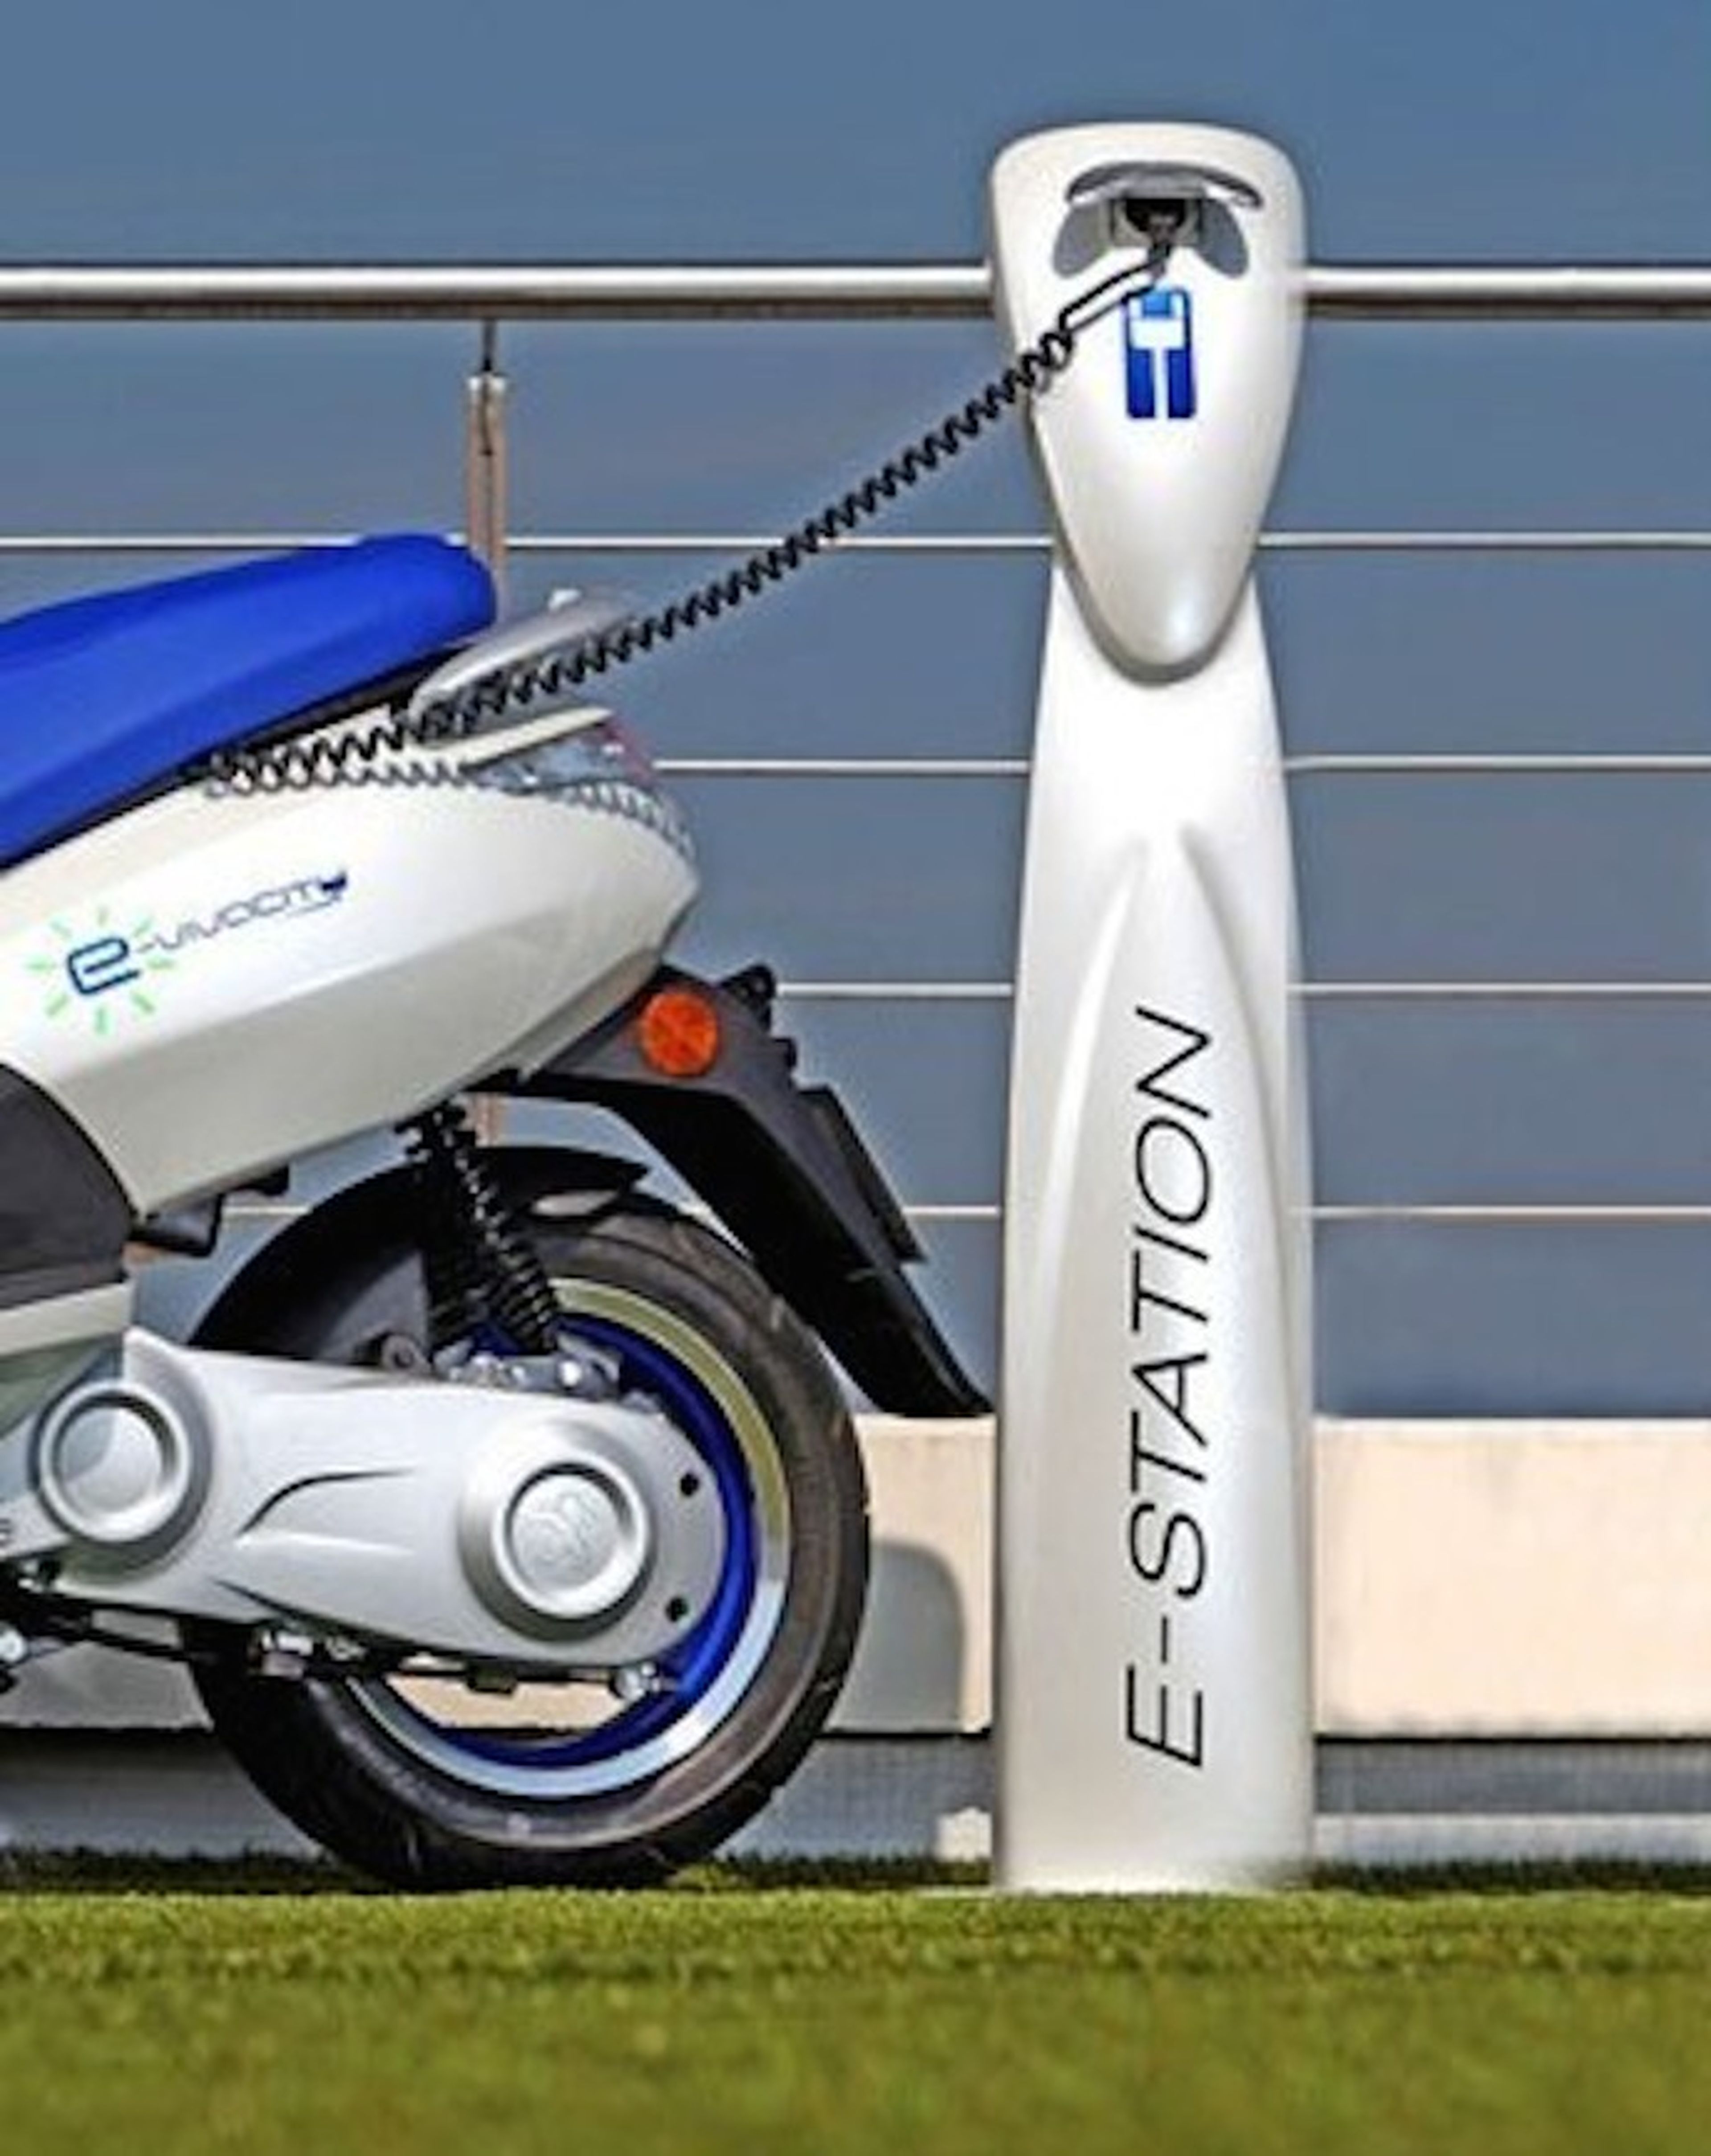 Cataluña fabricará un scooter eléctrico a partir de 2017